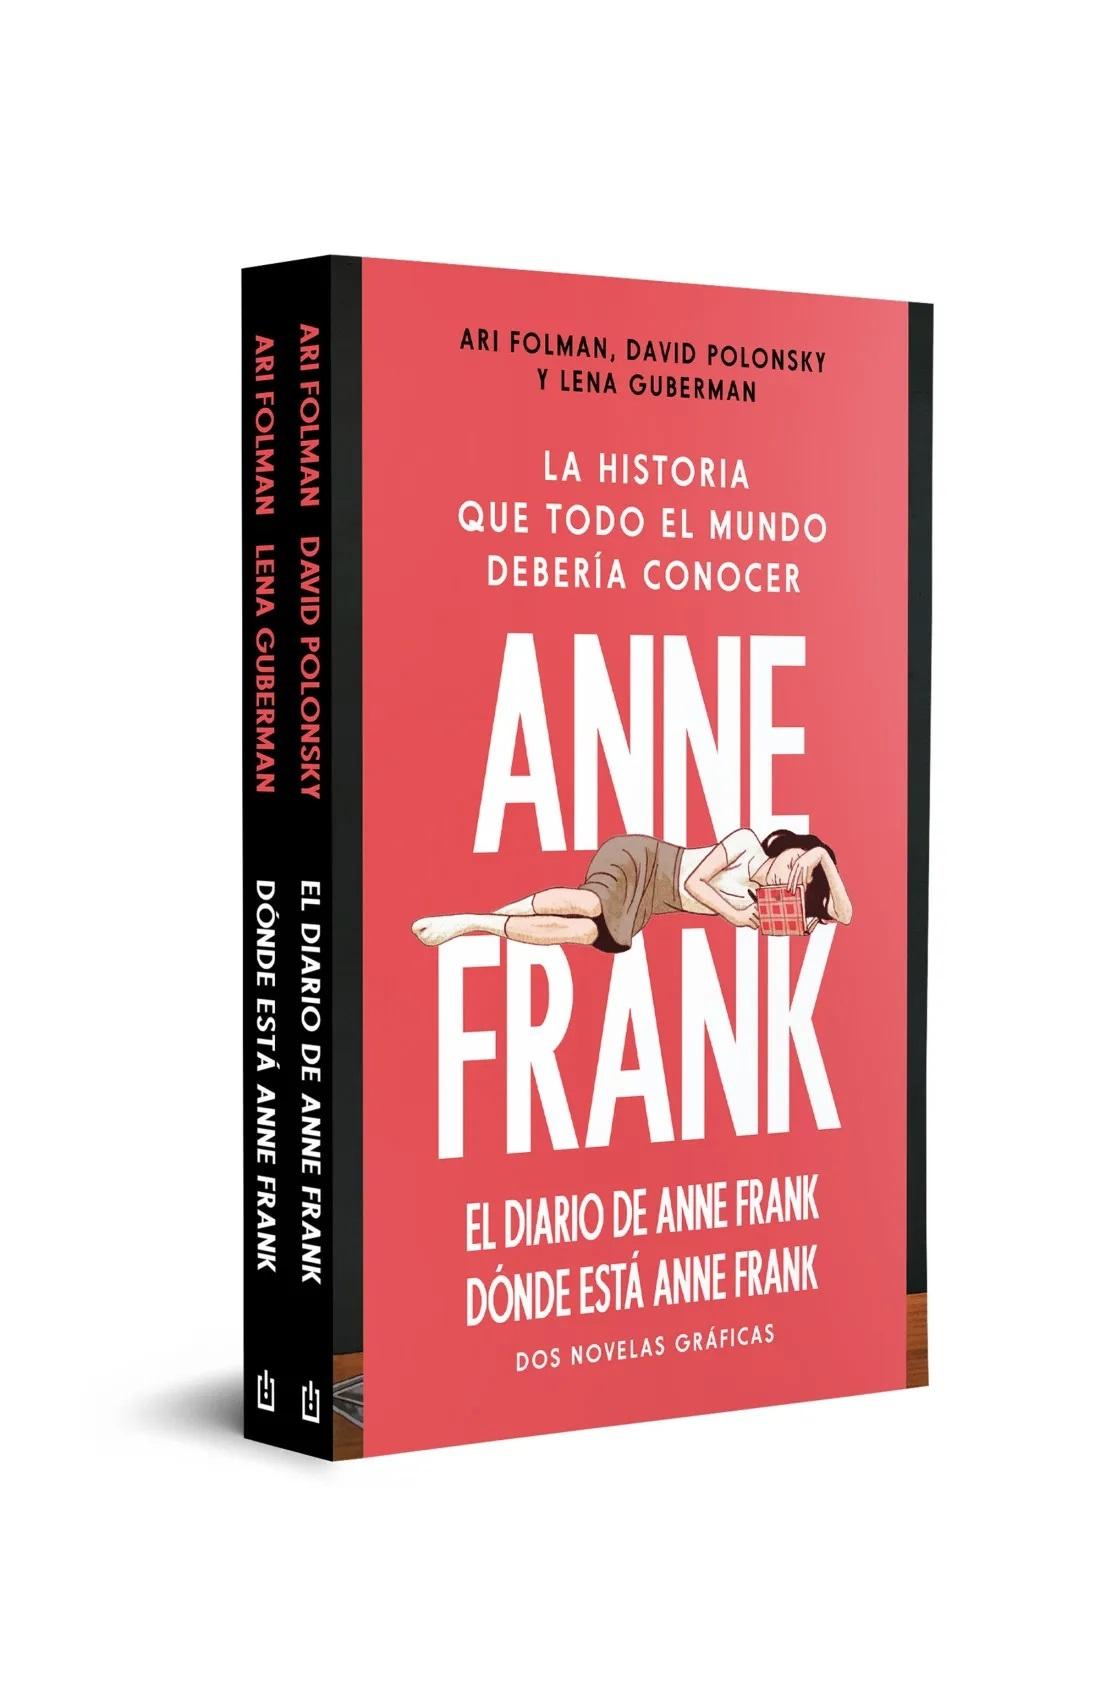 ANNE FRANK (PACK: EL DIARIO DE ANNE FRANK / DÓNDE ESTÁ ANNE FRANK) "DOS NOVELAS GRÁFICAS"